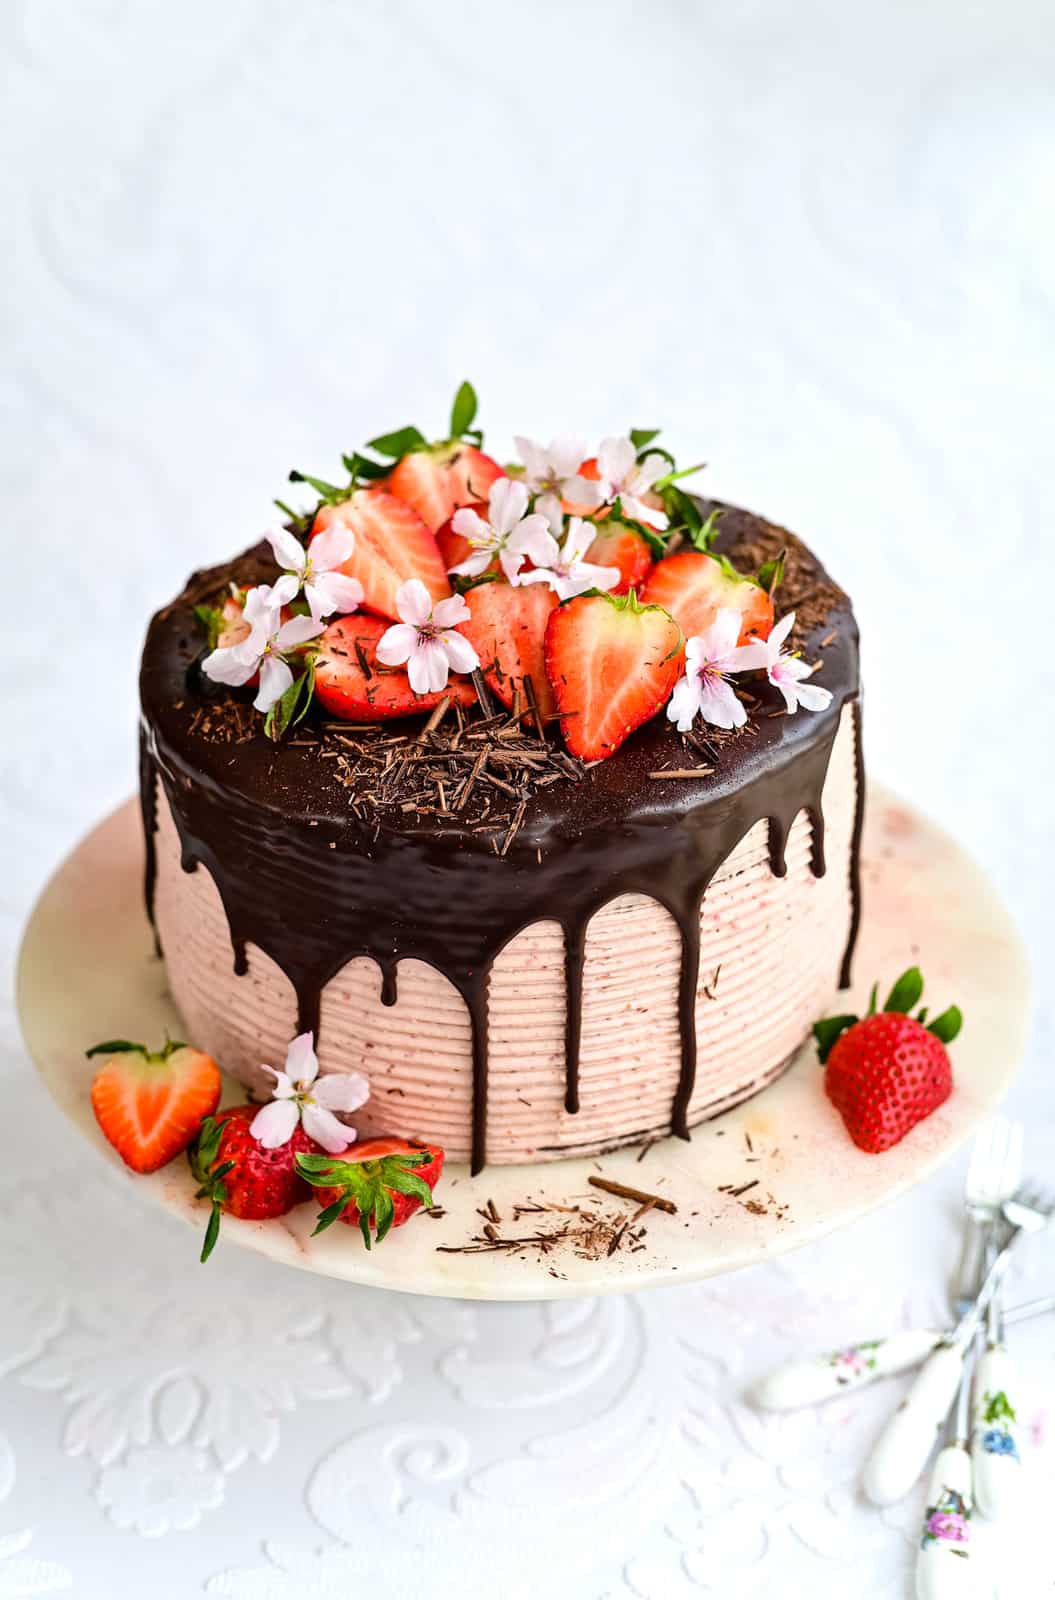 Chocolate Strawberry Nutella Cake